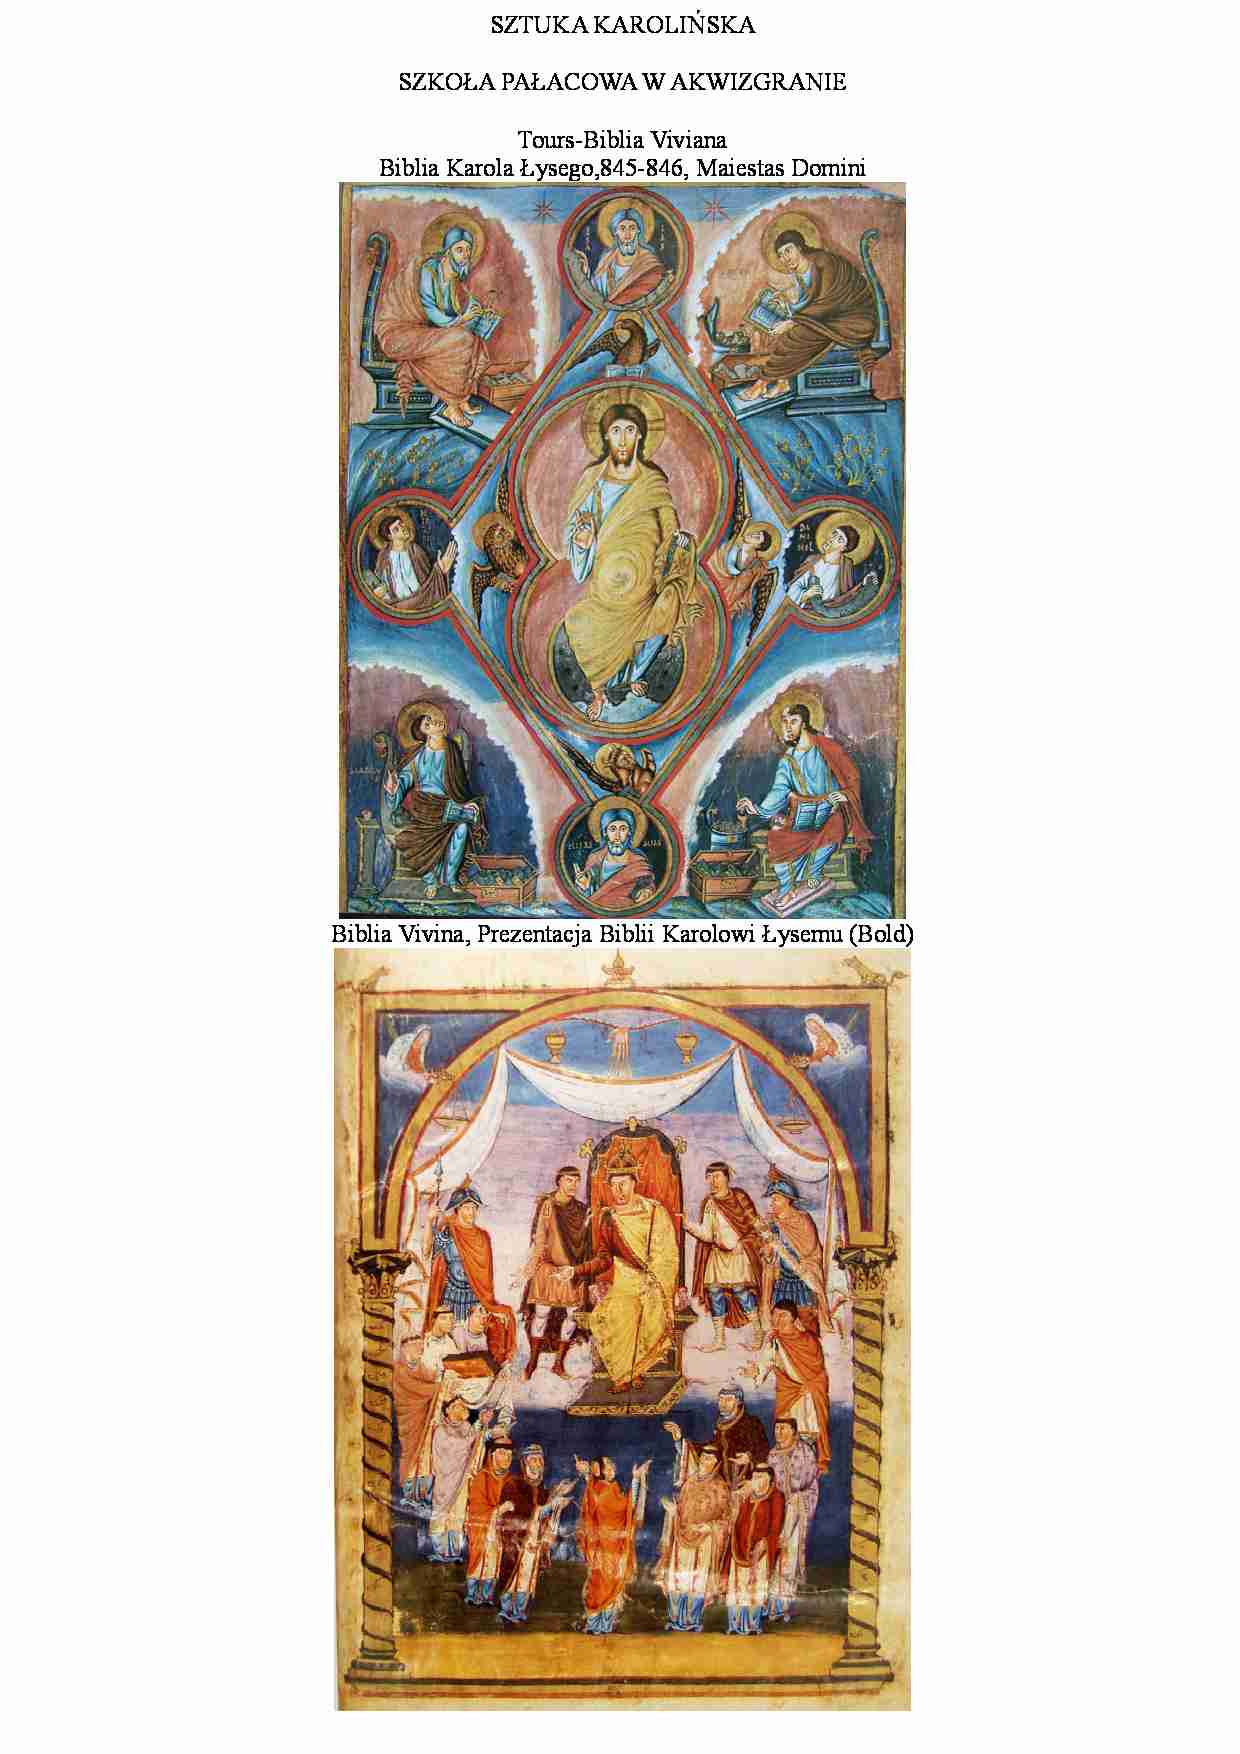 Sztuka karolińska-Tours-Biblia Viviana - strona 1